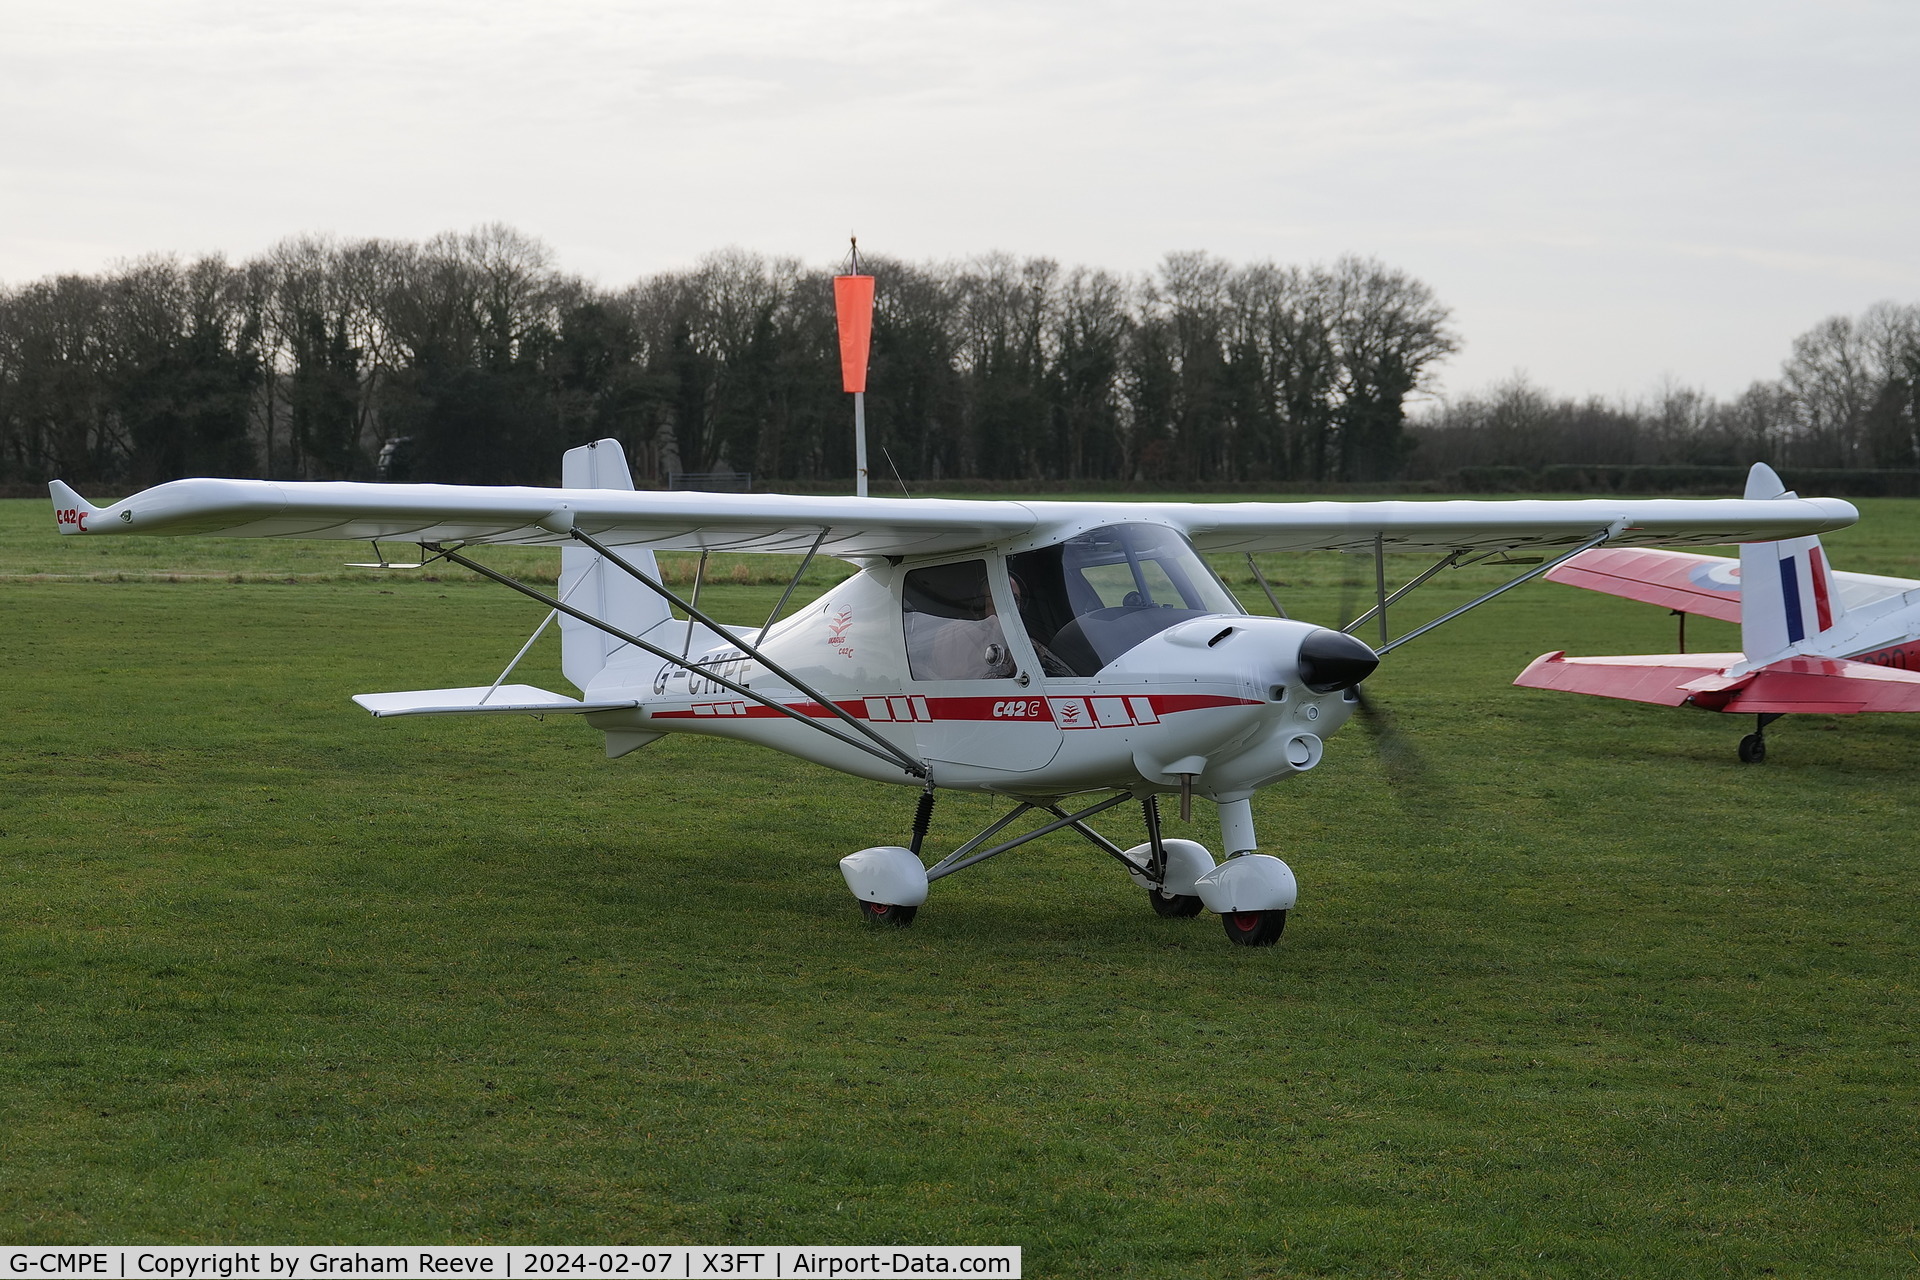 G-CMPE, 2023 Comco Ikarus C42 FB100 Charlie C/N 2203-7682, Just landed at Felthorpe.